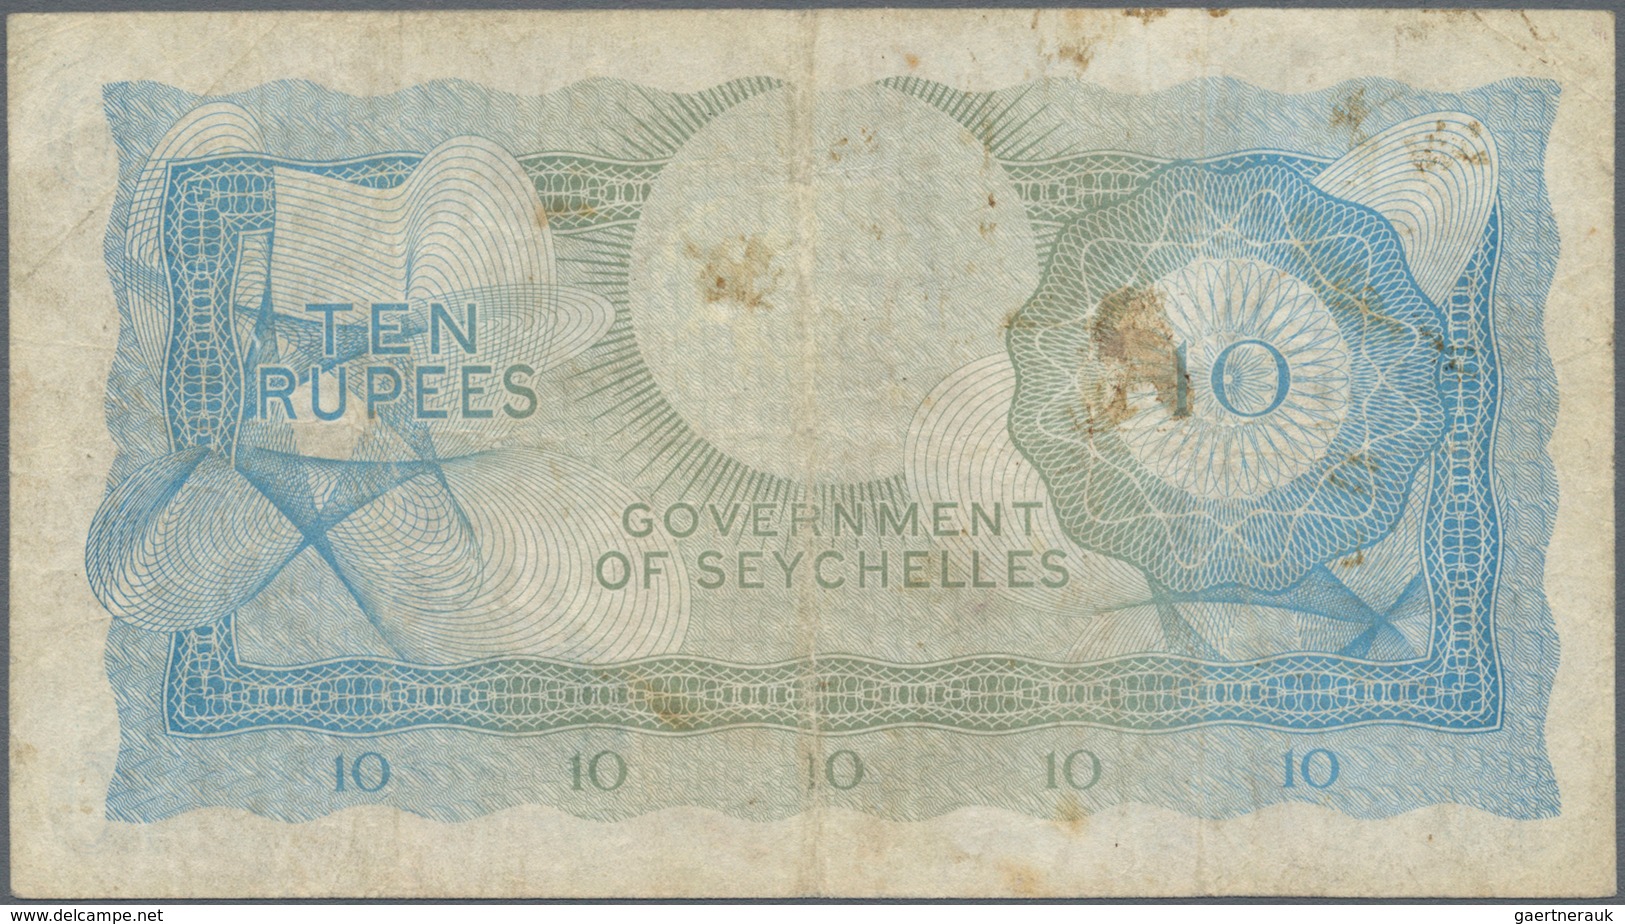 Seychelles / Seychellen: Government Of Seychelles 10 Rupees 1974, P.15b, Still Nice With Several Fol - Seychelles